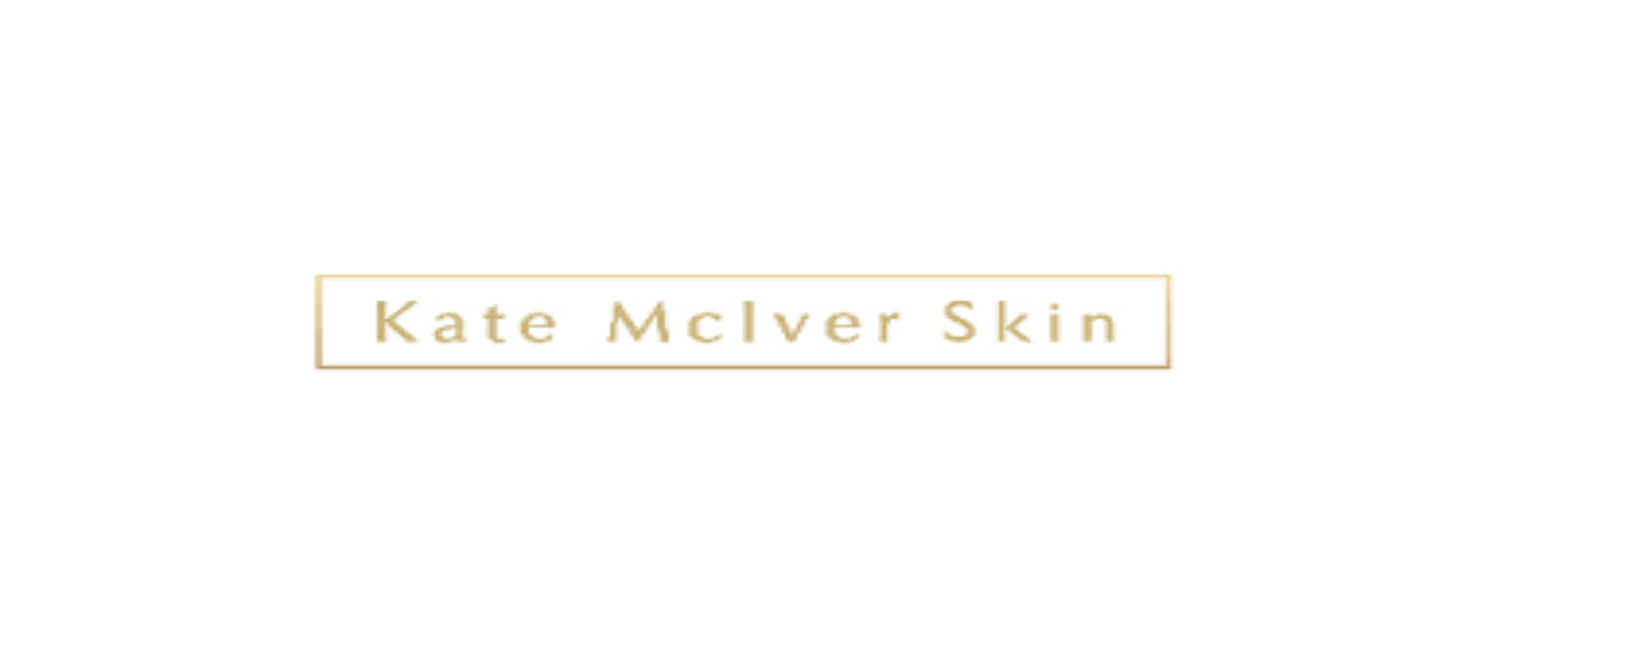 Kate McIver Skin Discount Code 2022